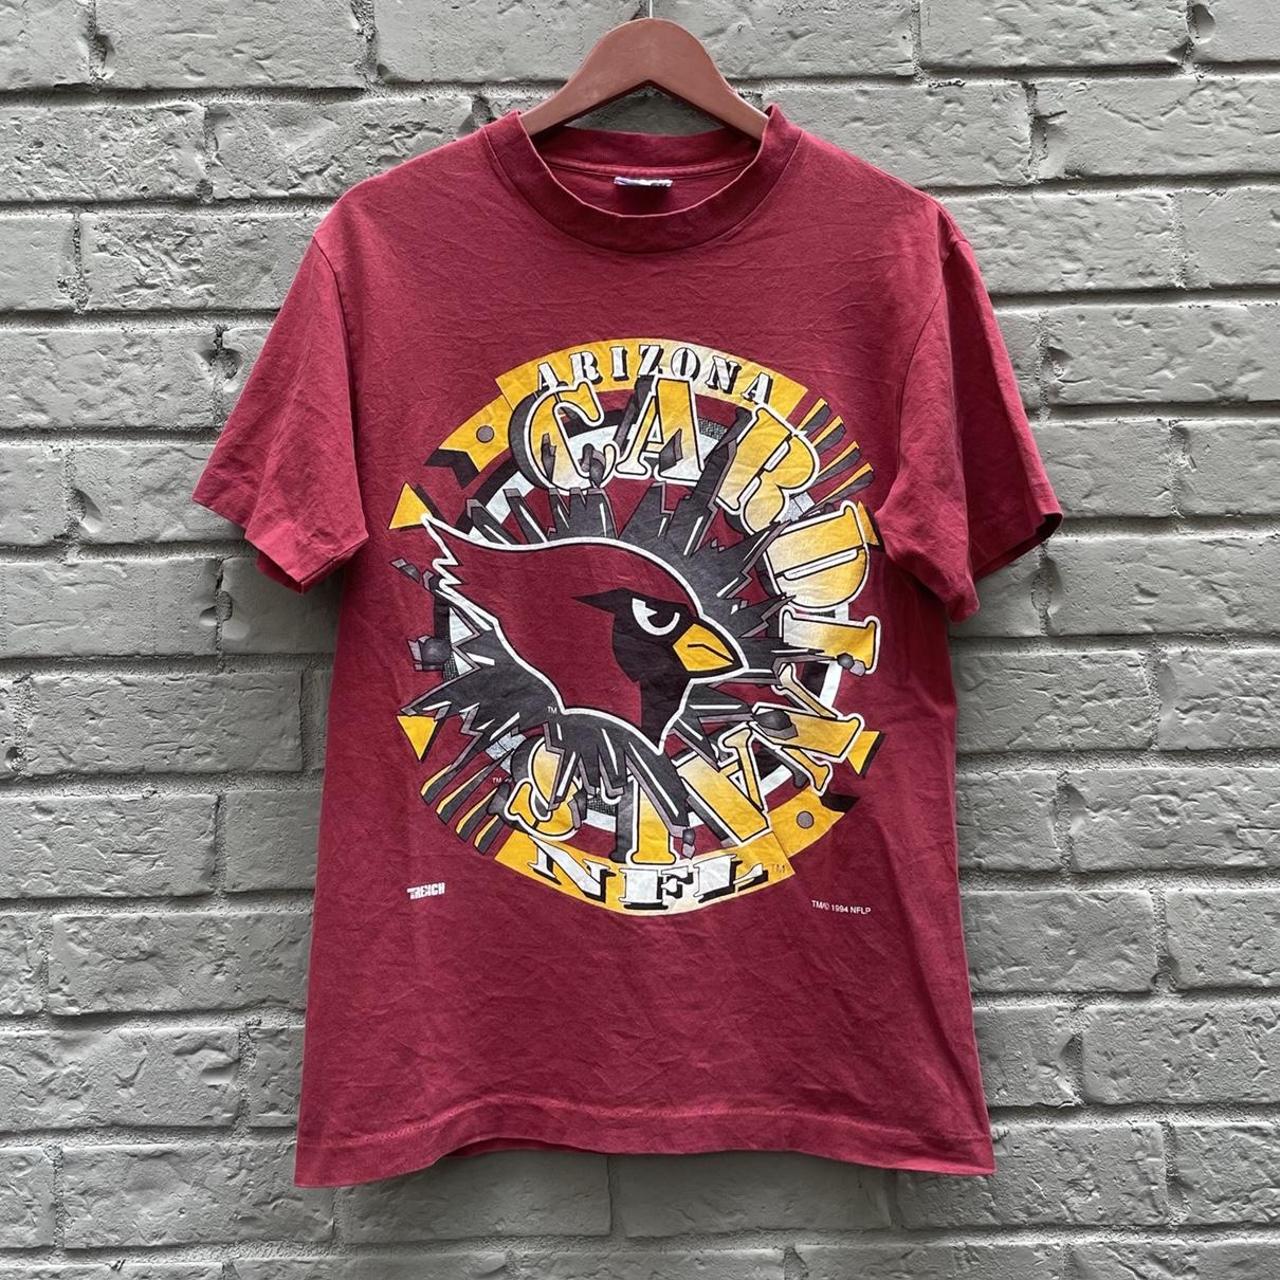 Arizona Cardinals Men's Retro Vintage T-Shirt (Medium) 